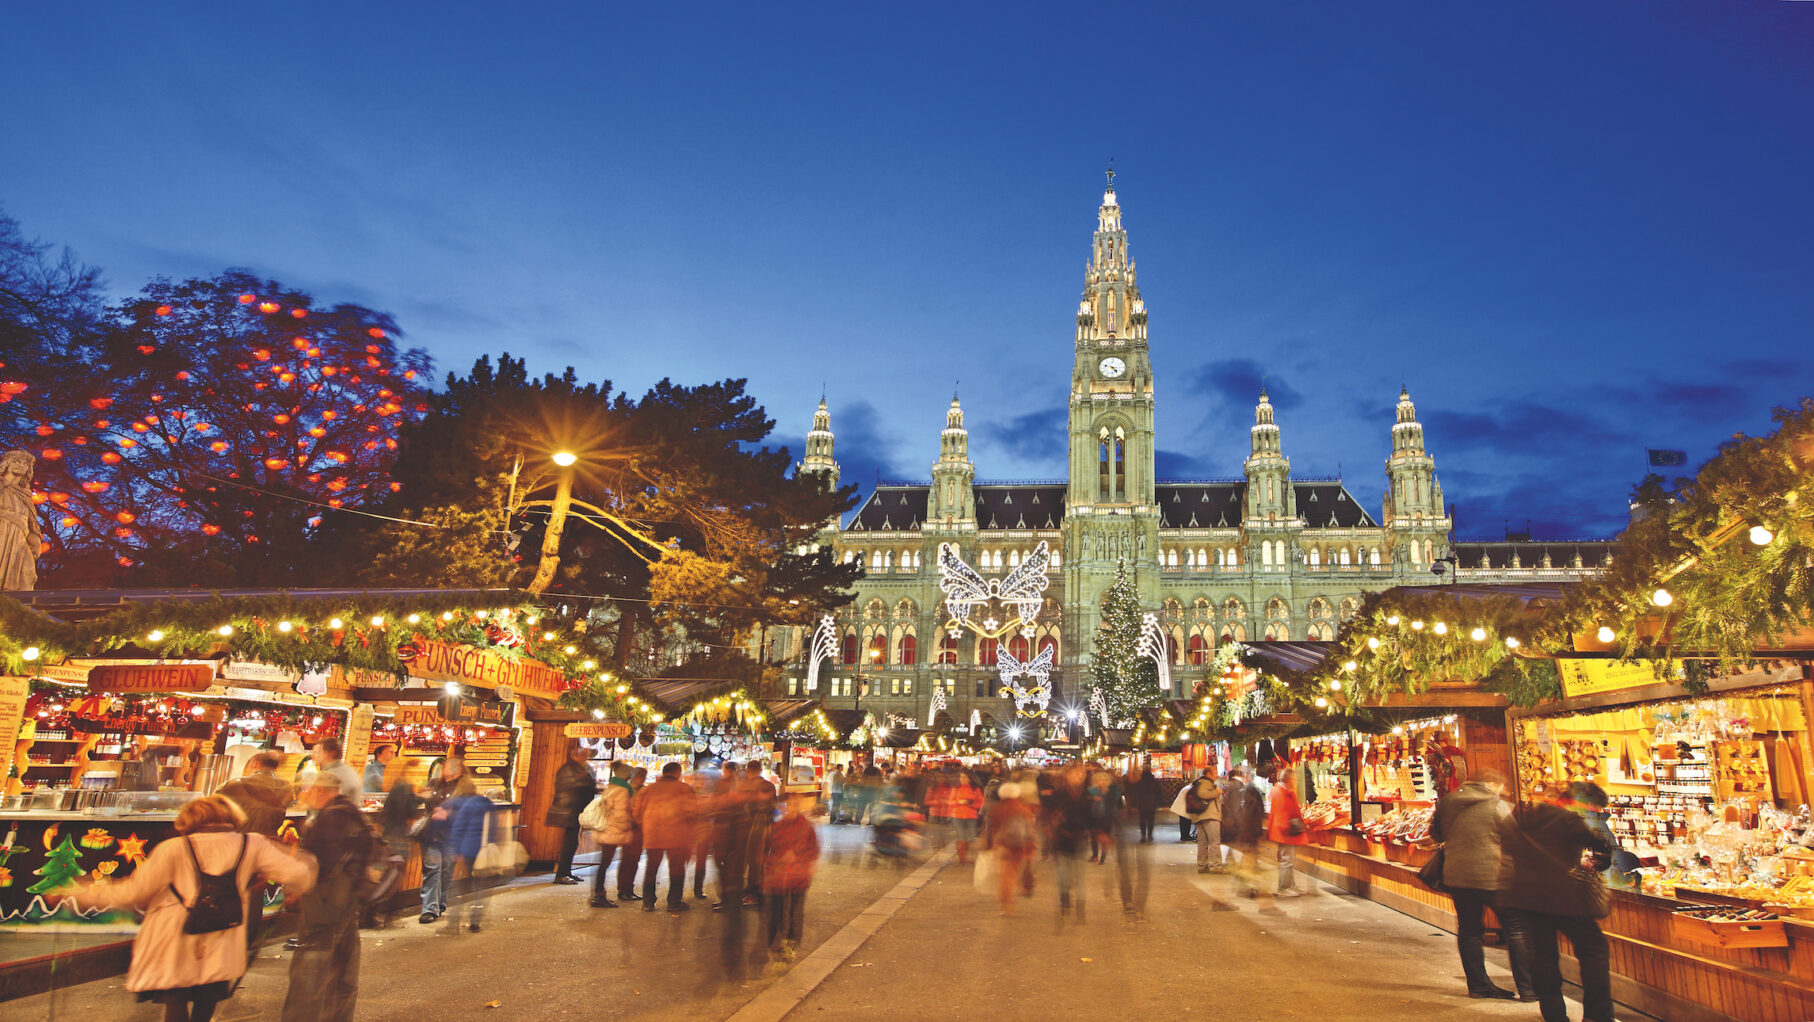 The festive season lights of historic Vienna.